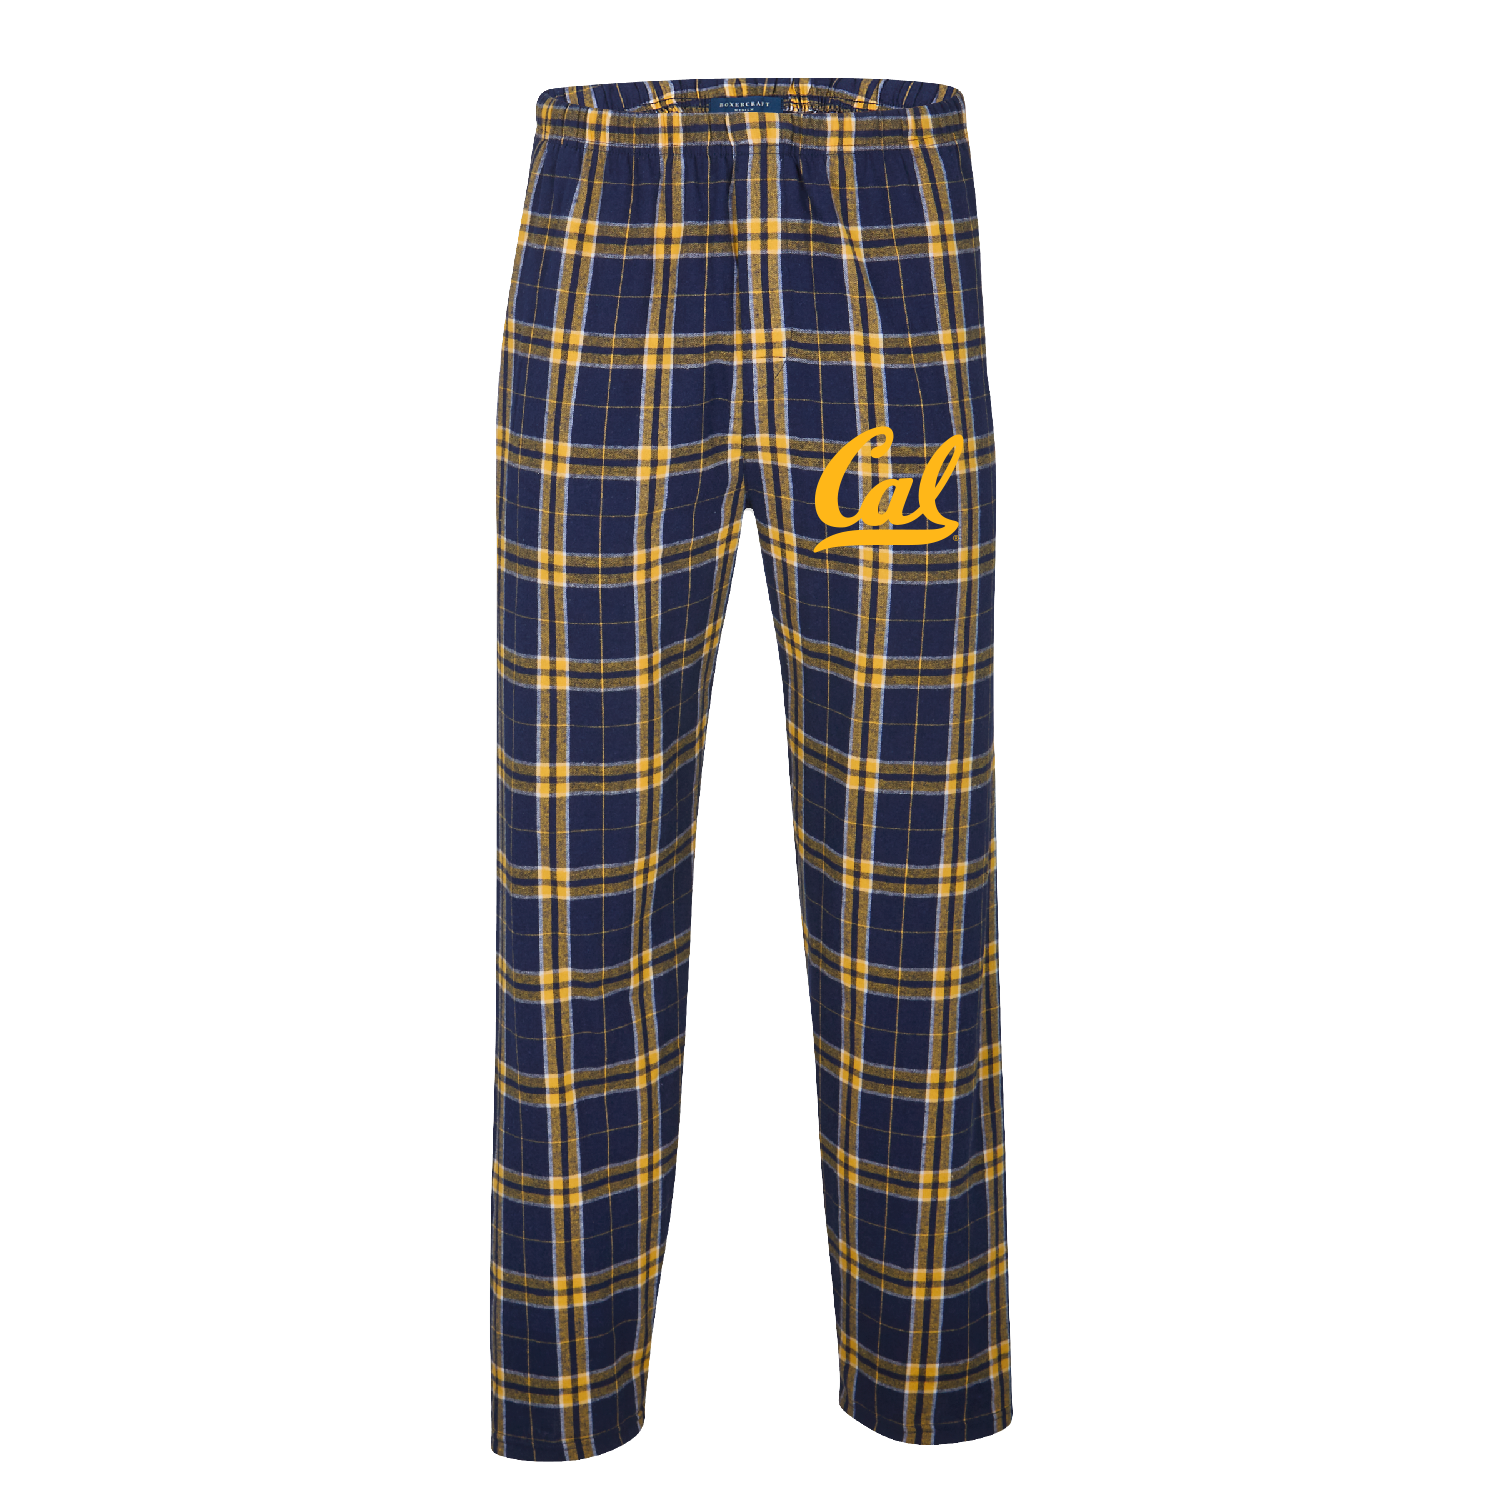 U.C. Berkeley Script Cal one colors men's flannel pants-Navy-Shop College Wear